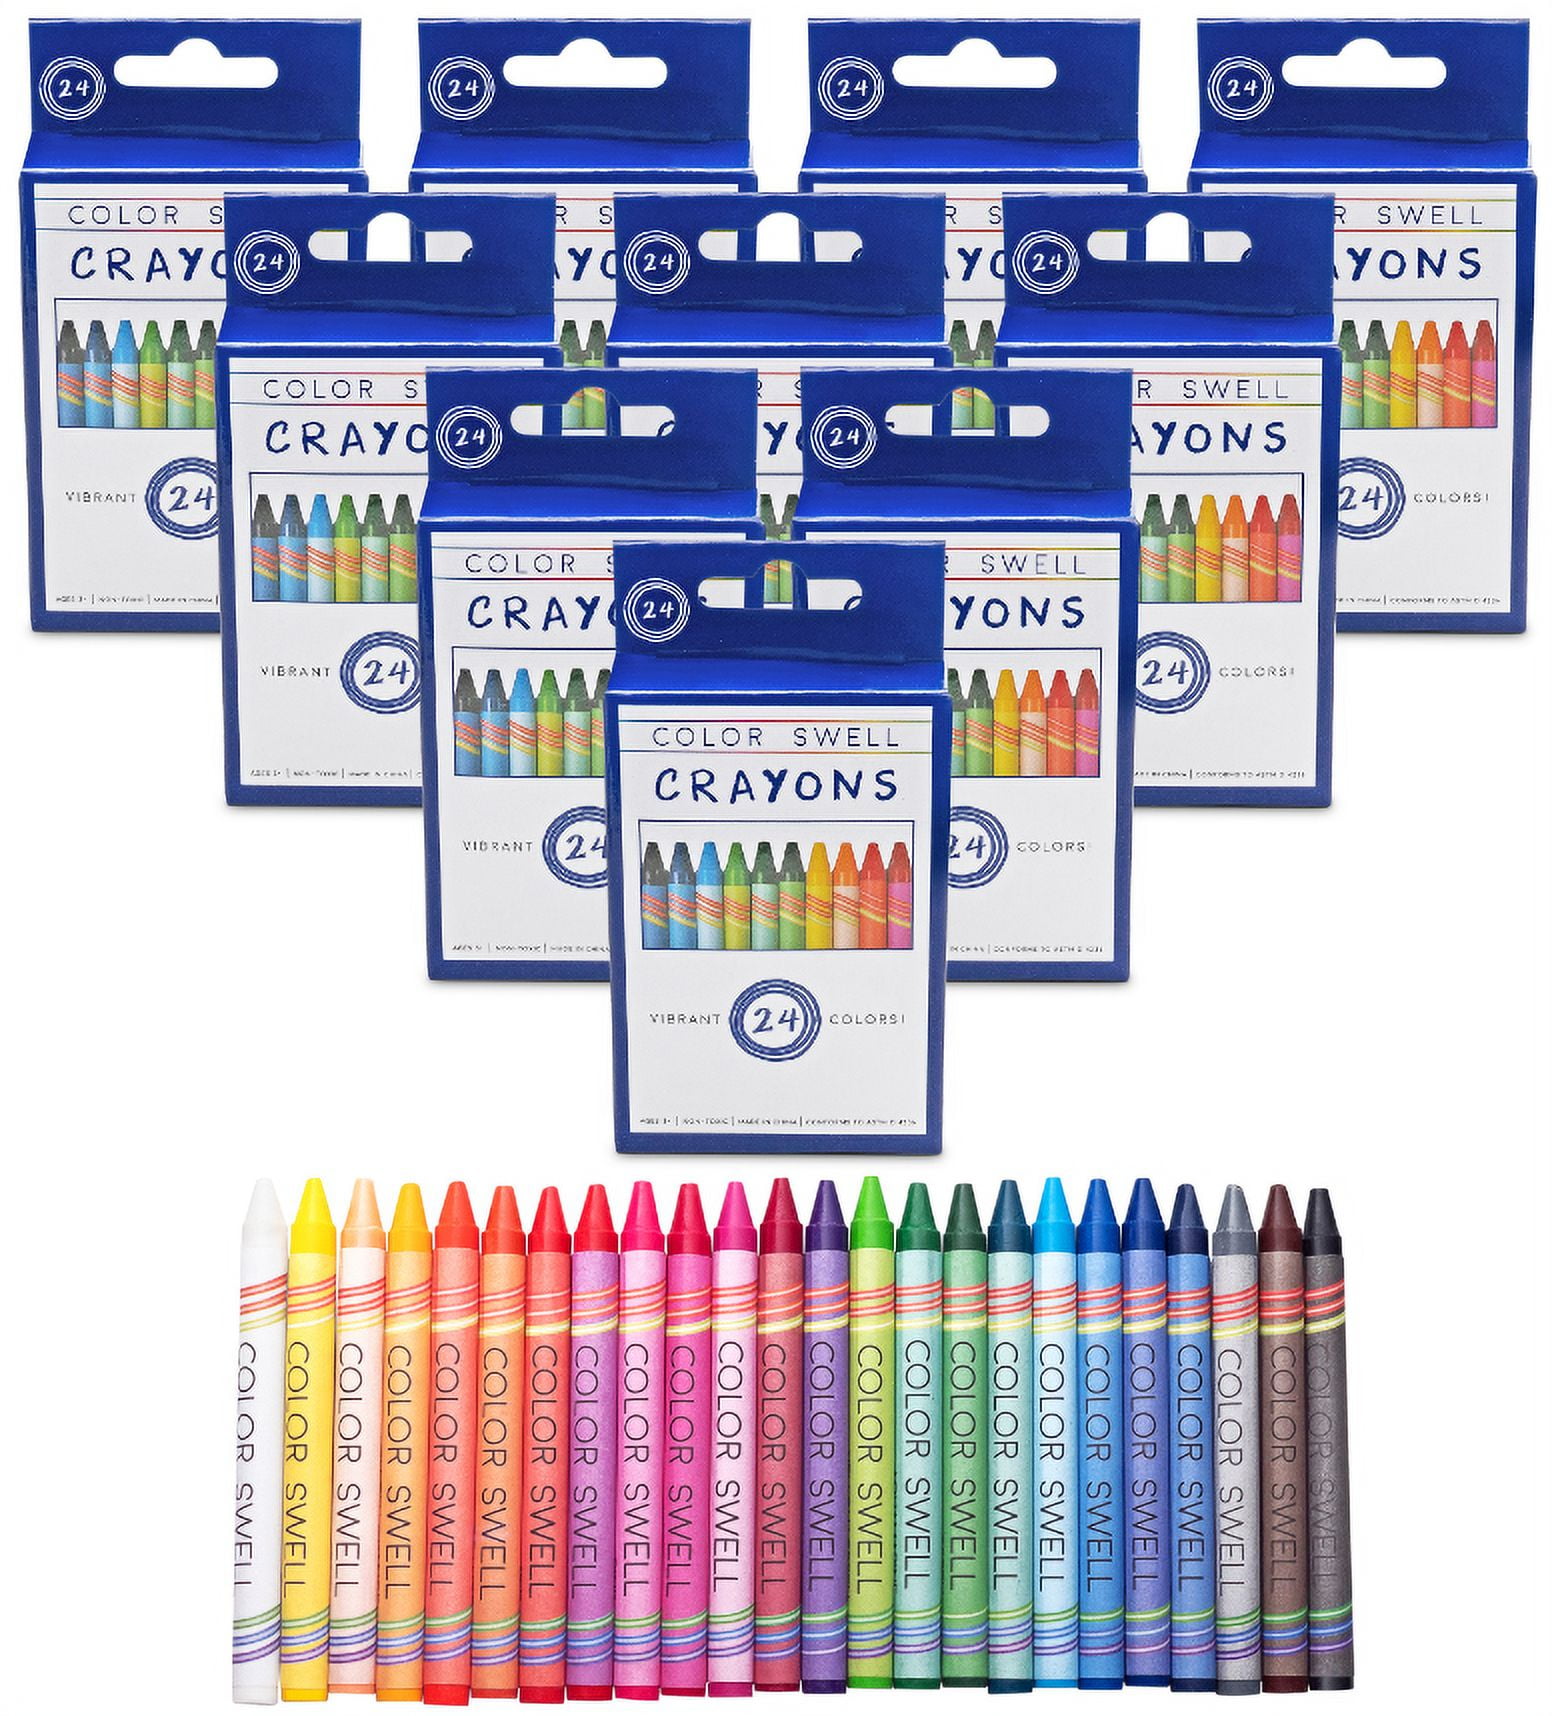 White Crayola Crayons 10 Pack 